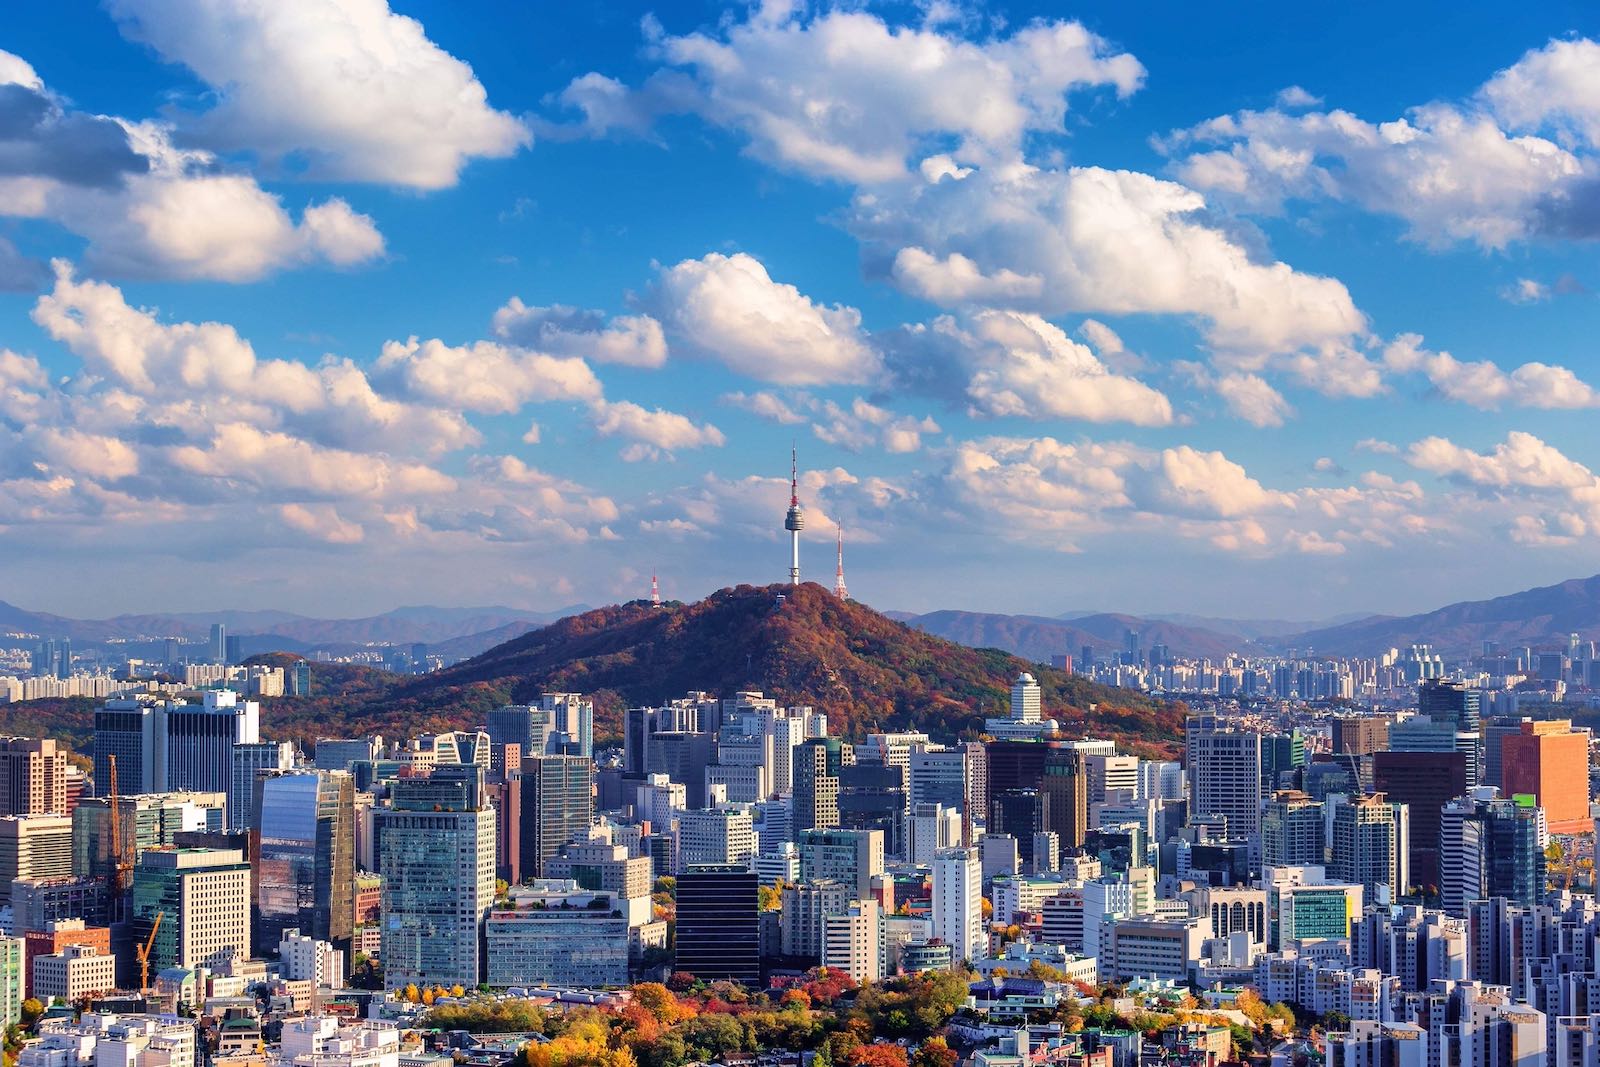 Seoul, South Korea (Getty Images)